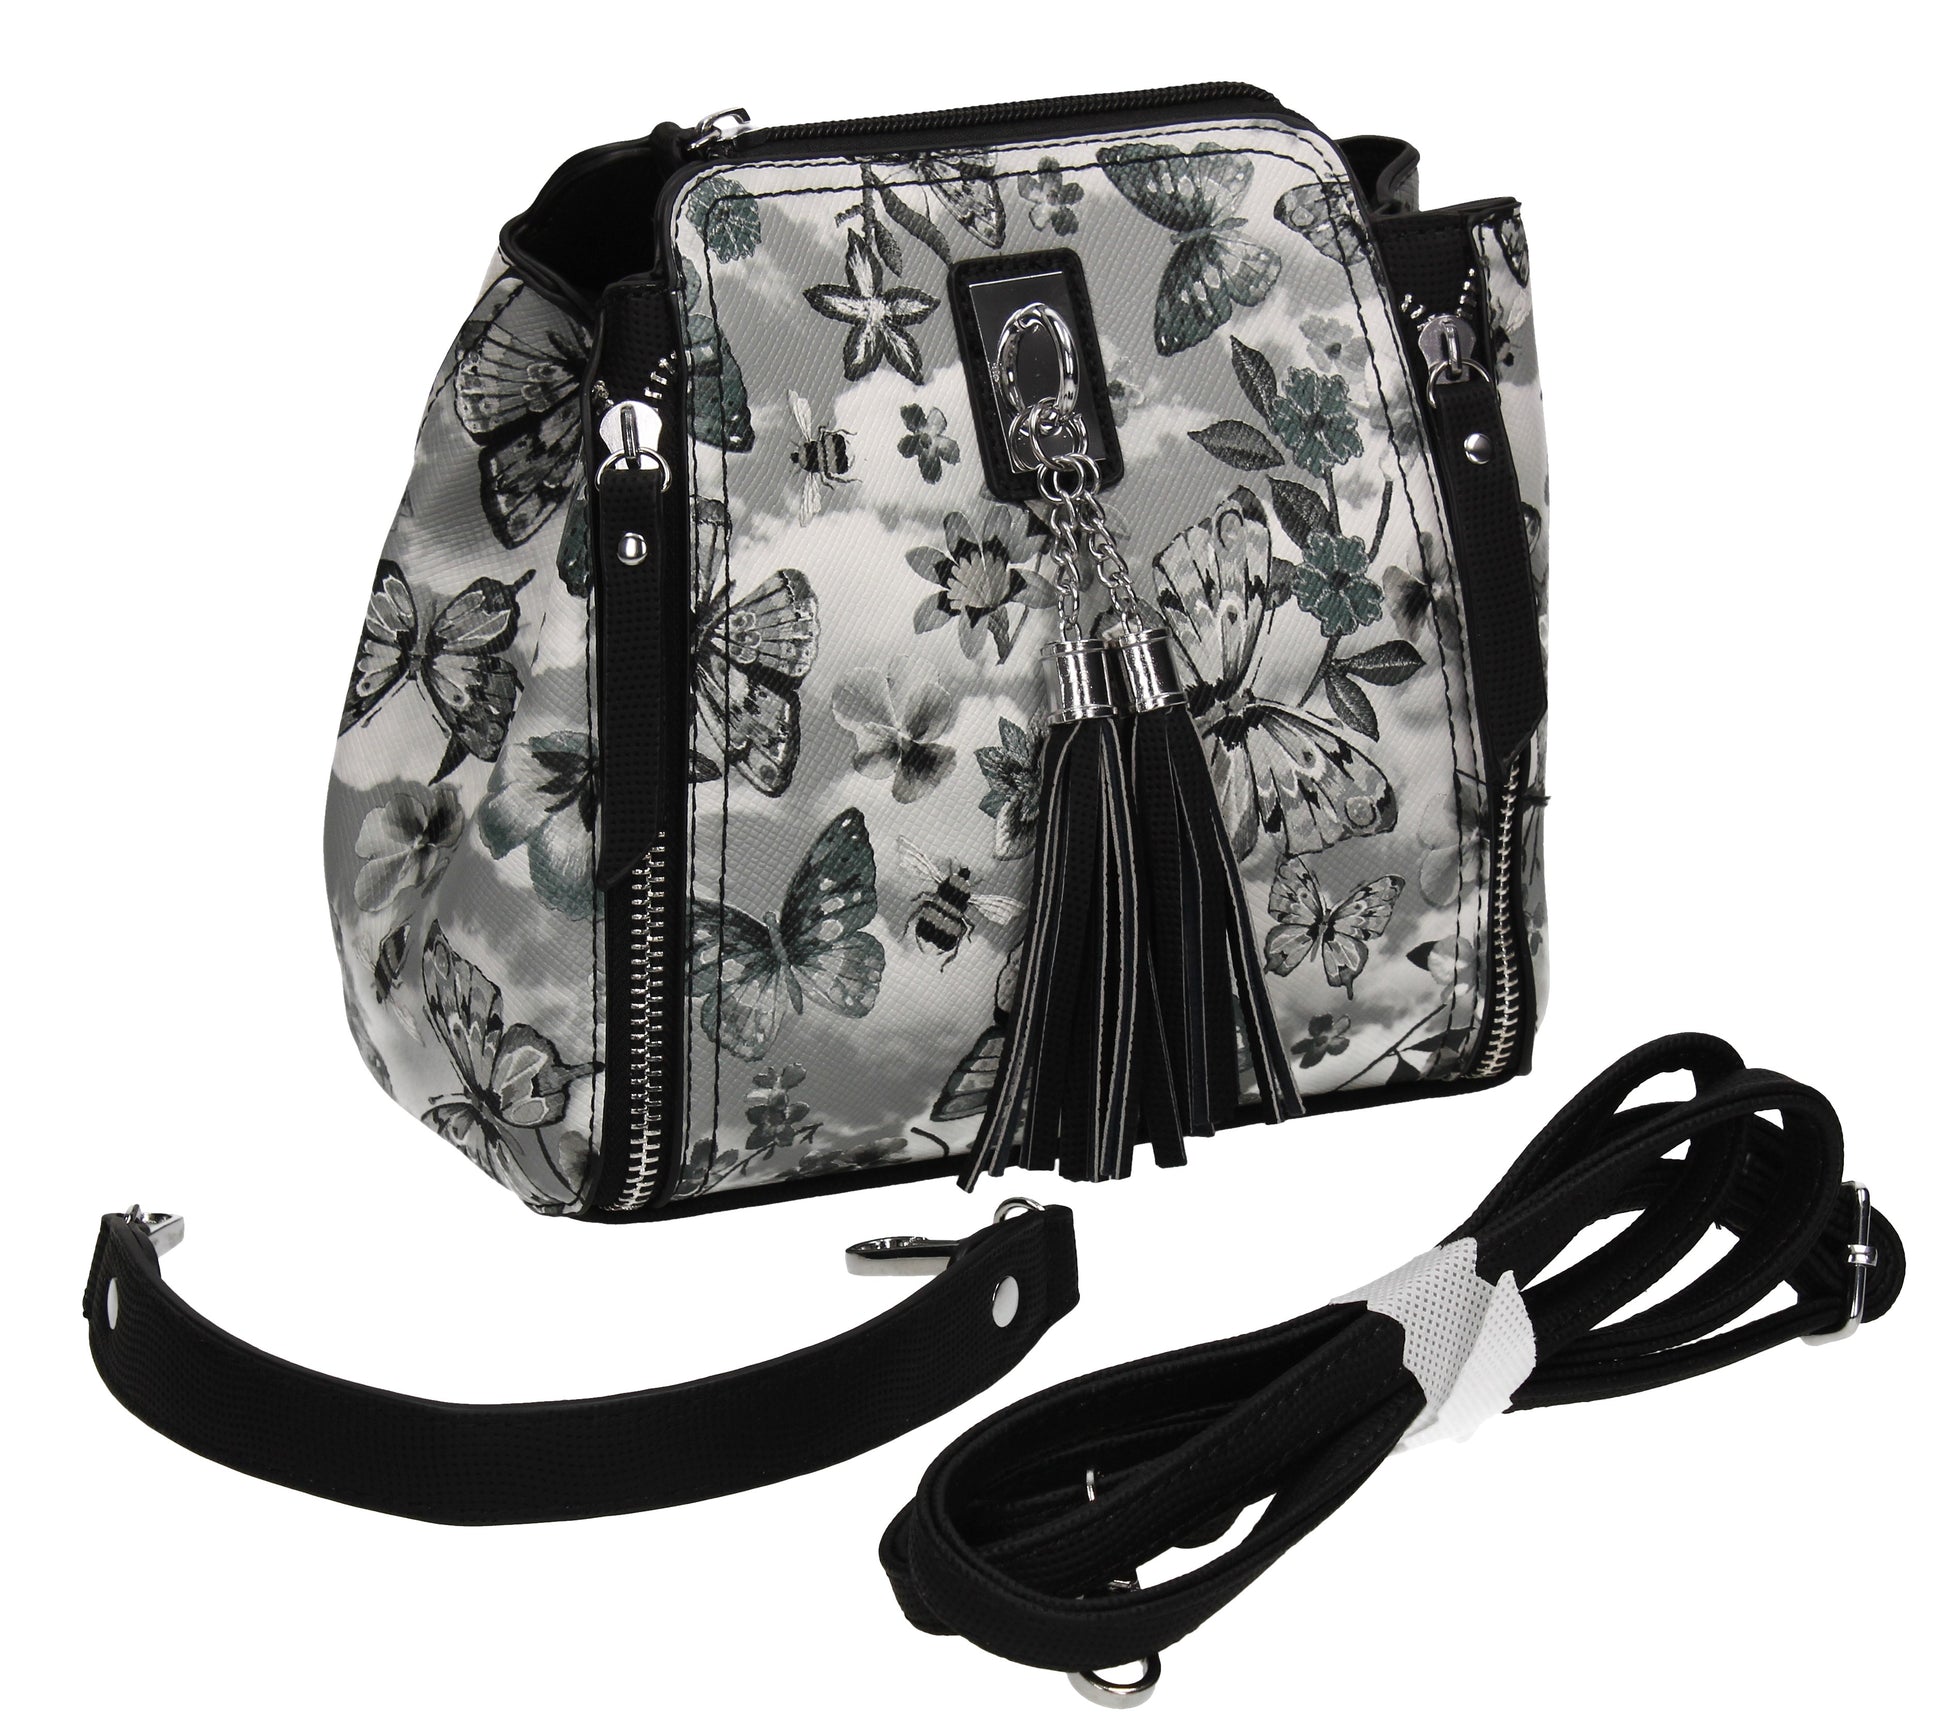 Anita Butterfly Handbag BlackBeautiful Cute Animal Faux Leather Clutch Bag Handles Strap Summer School